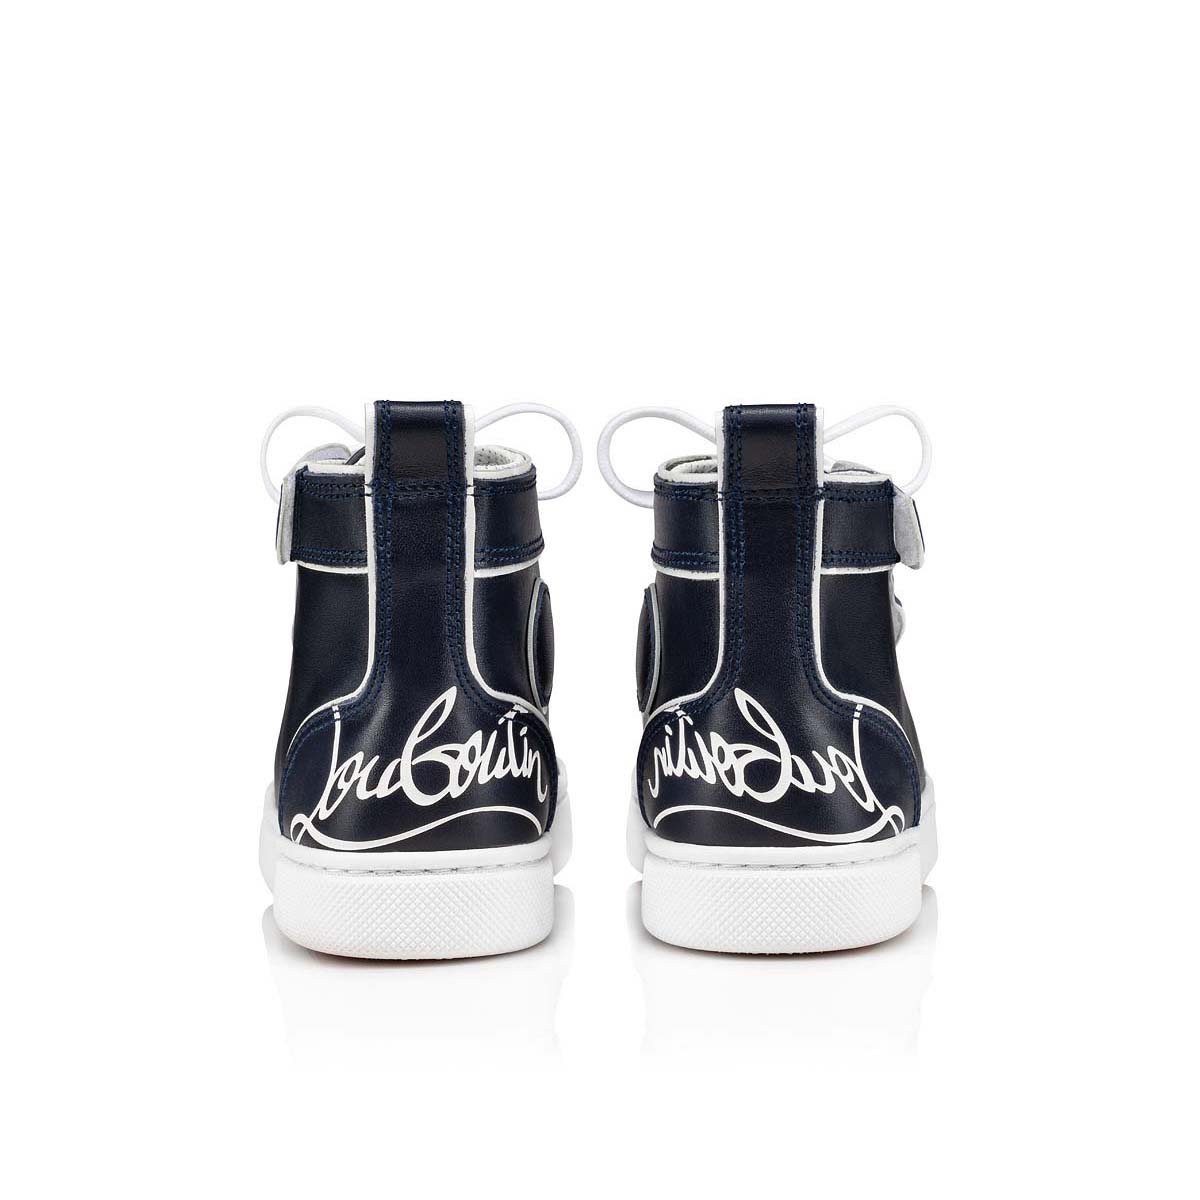 Christian Louboutin Funnytopi White - Kids Unisexs Shoes - Size 33